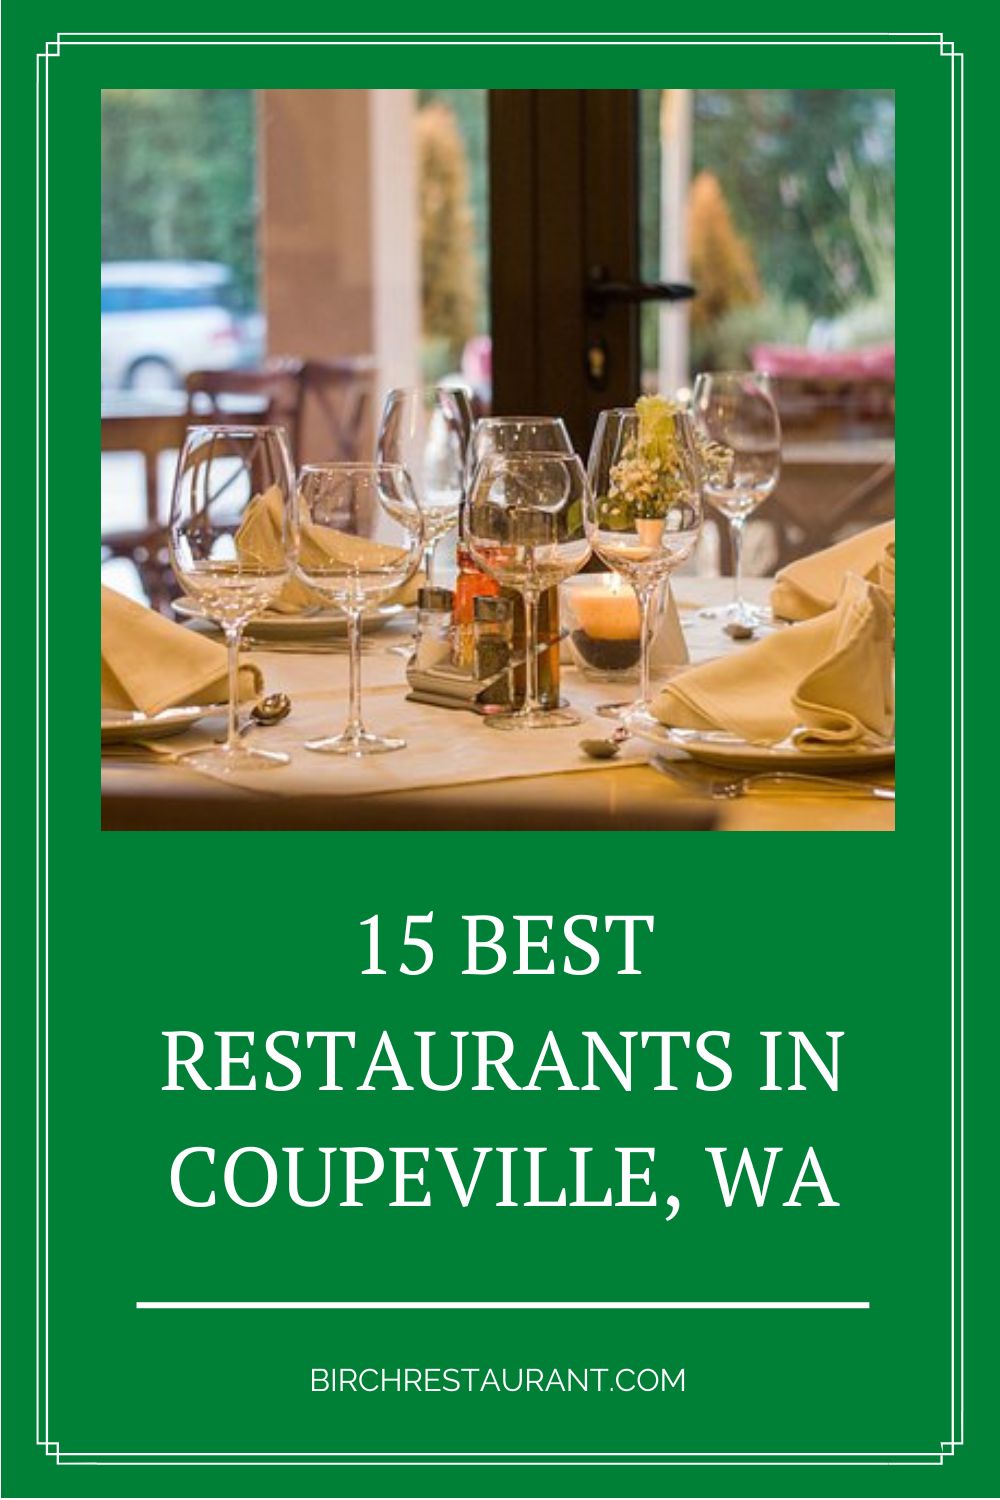 Best Restaurants in Coupeville, WA